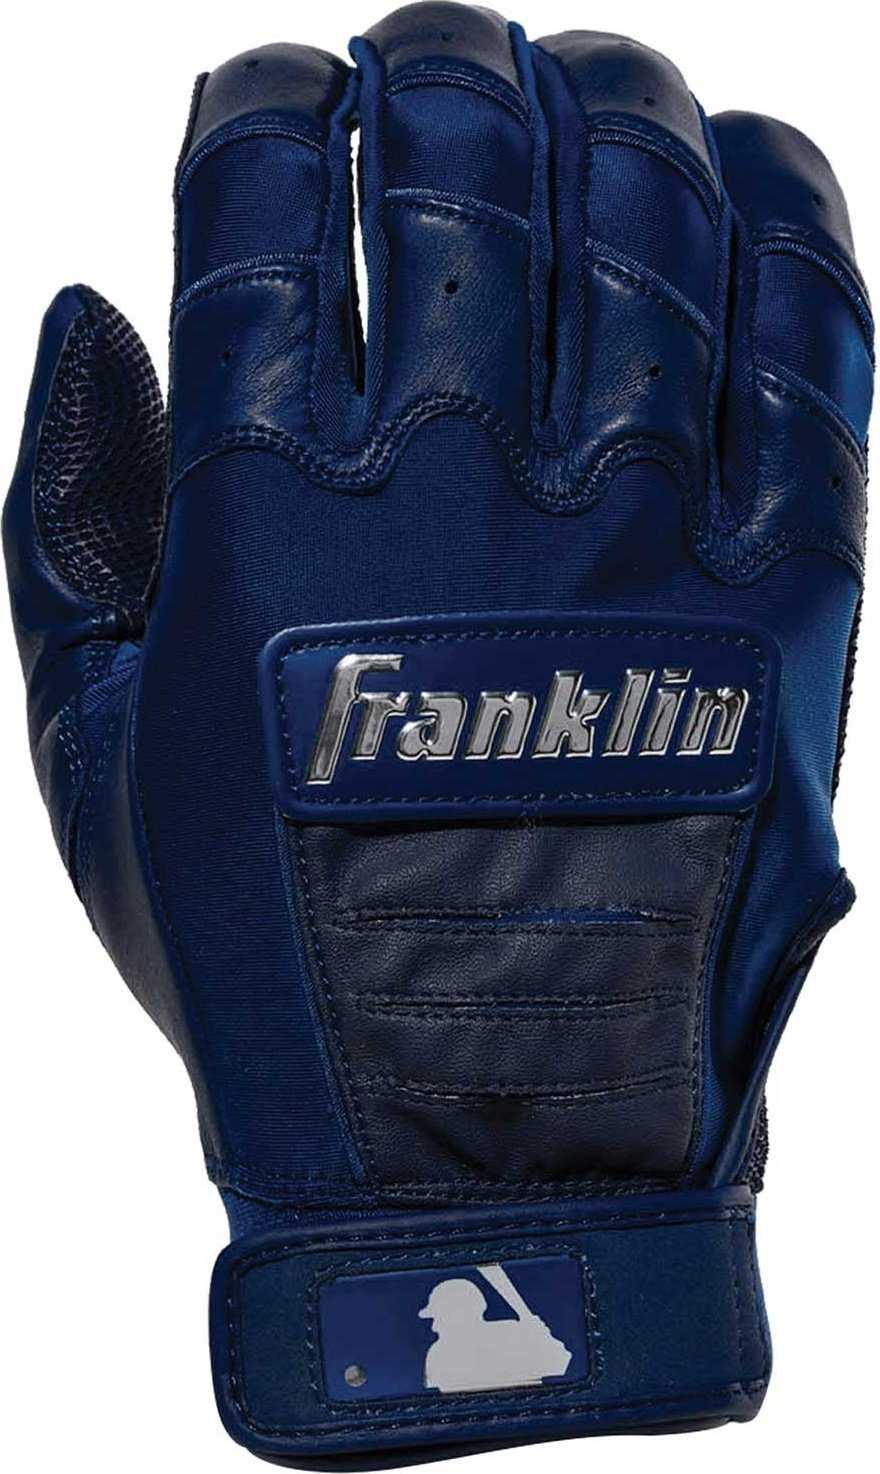 Franklin CFX Pro Chrome Adult Batting Gloves - Navy - HIT a Double